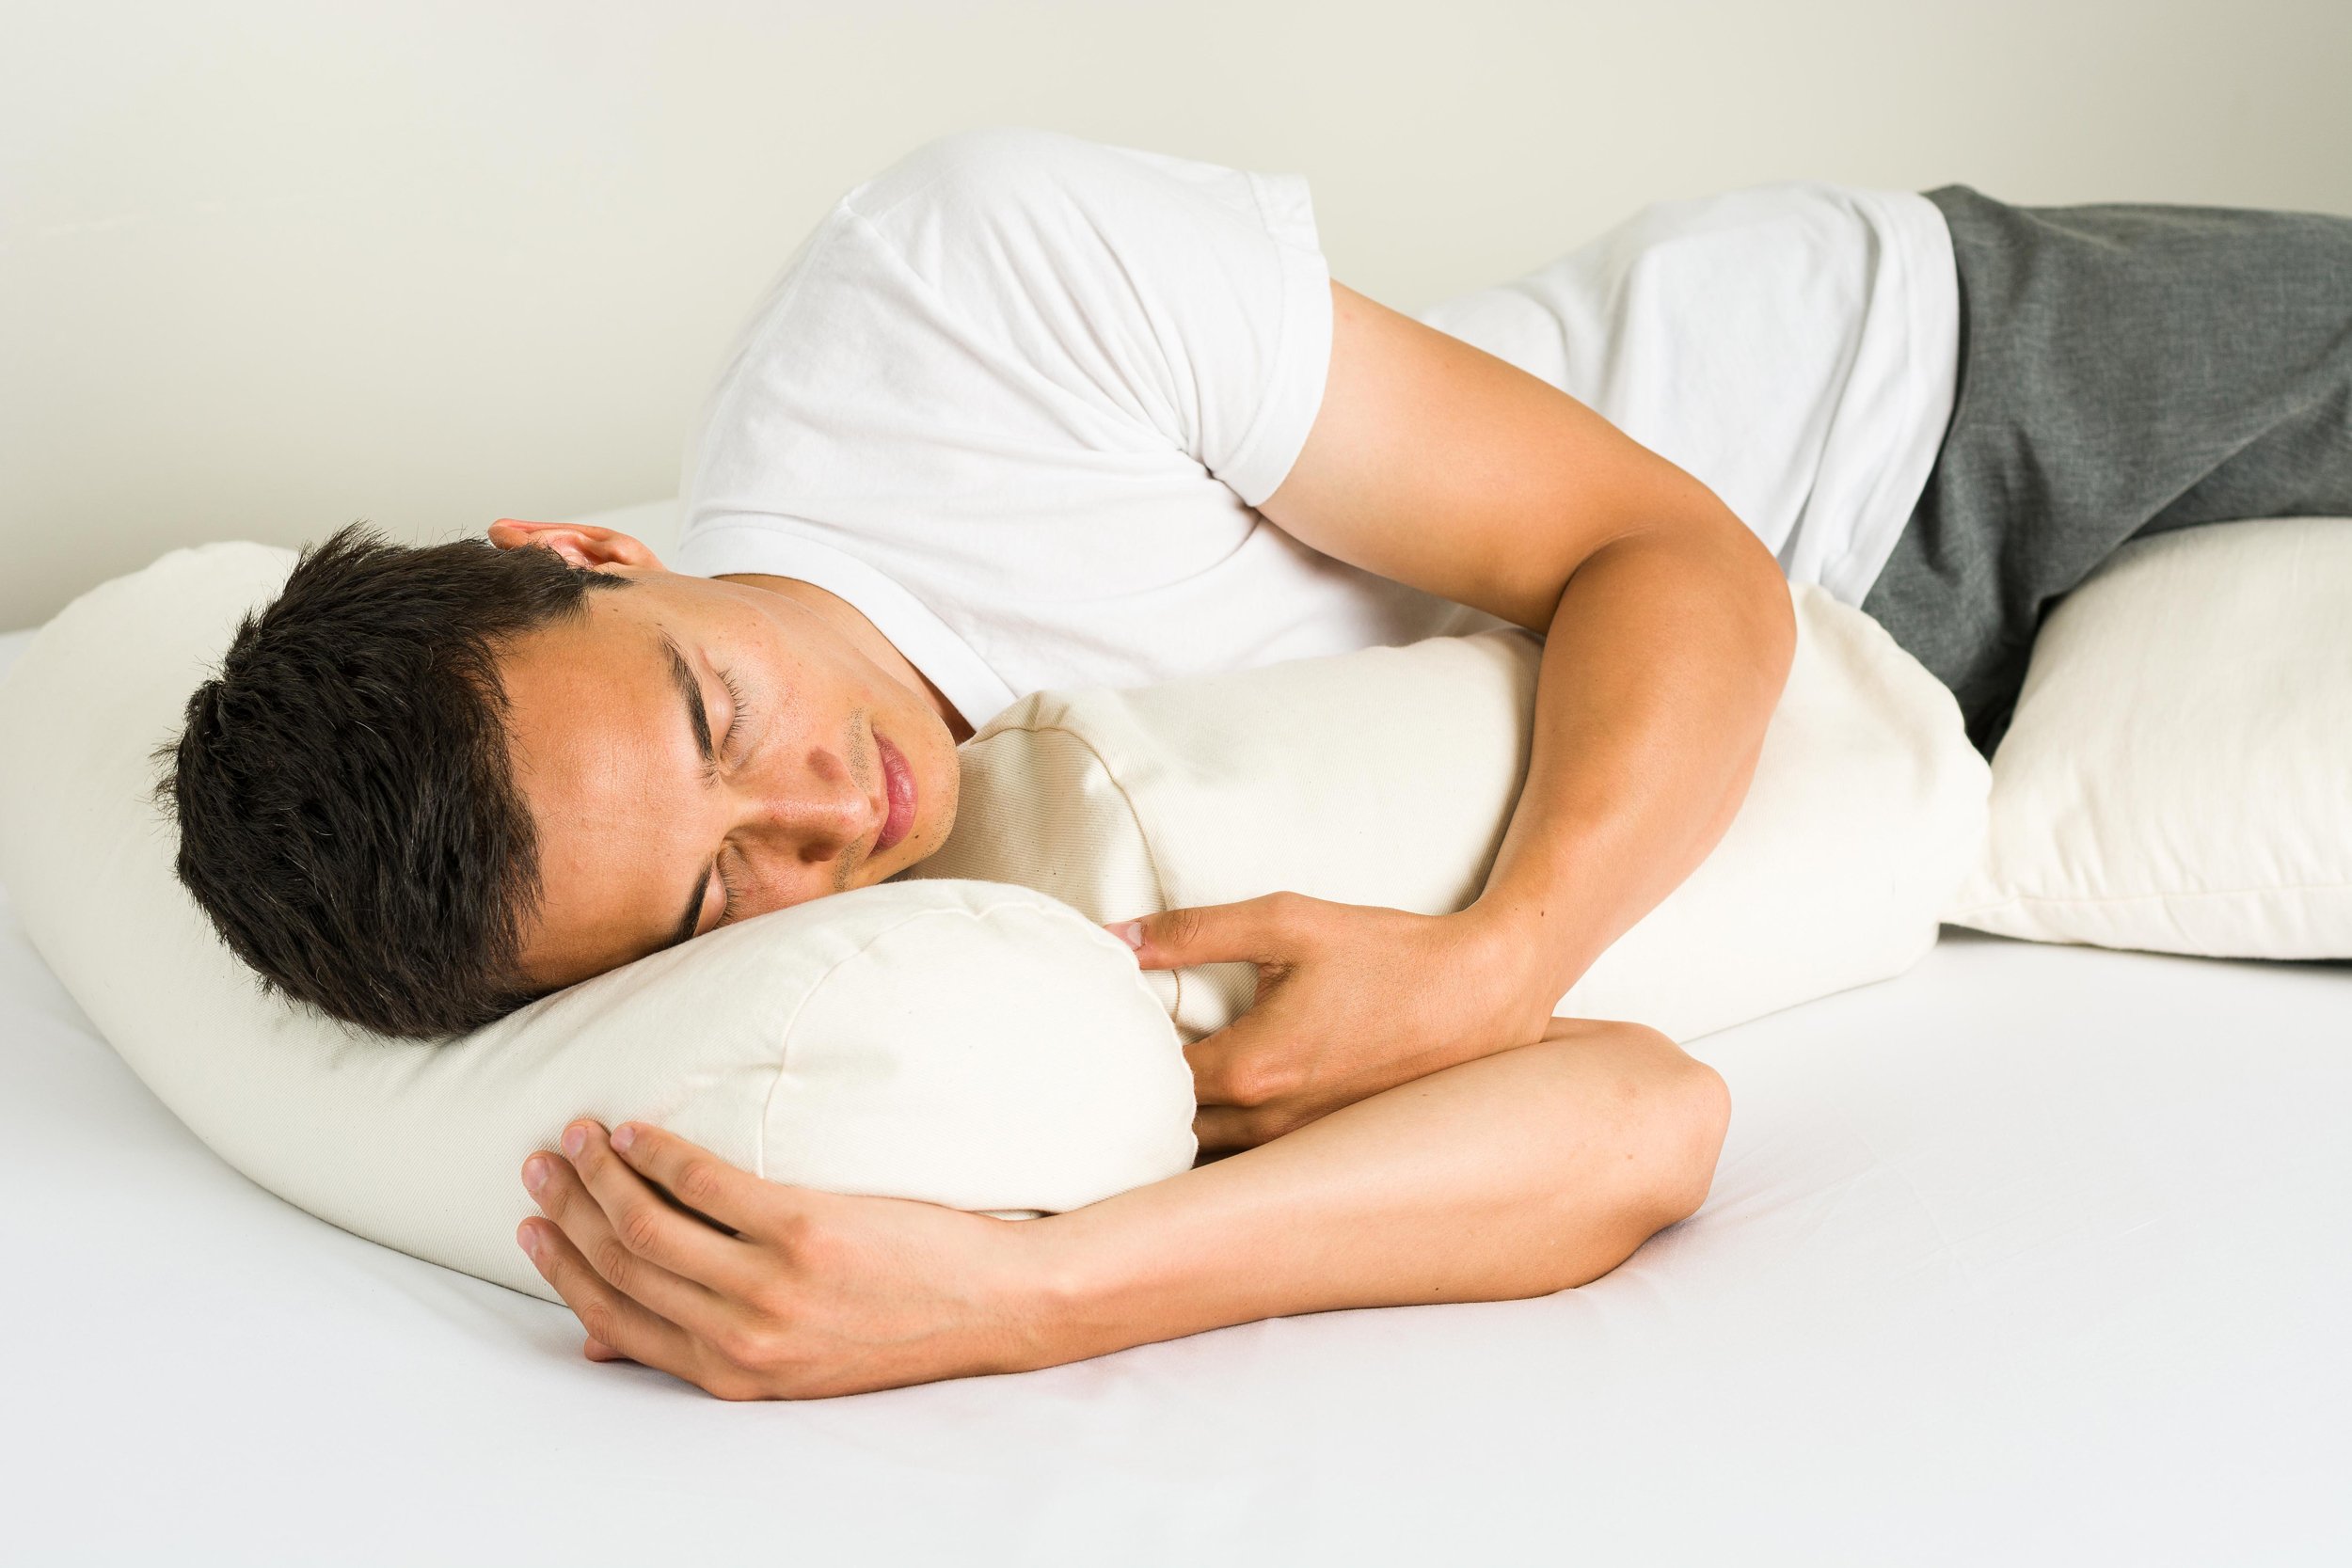 I am sleeping. Sleep Dream Pillow Reviews. Sleeping on the Pillow face. Side nap. Comfortable and Bad Sleep.